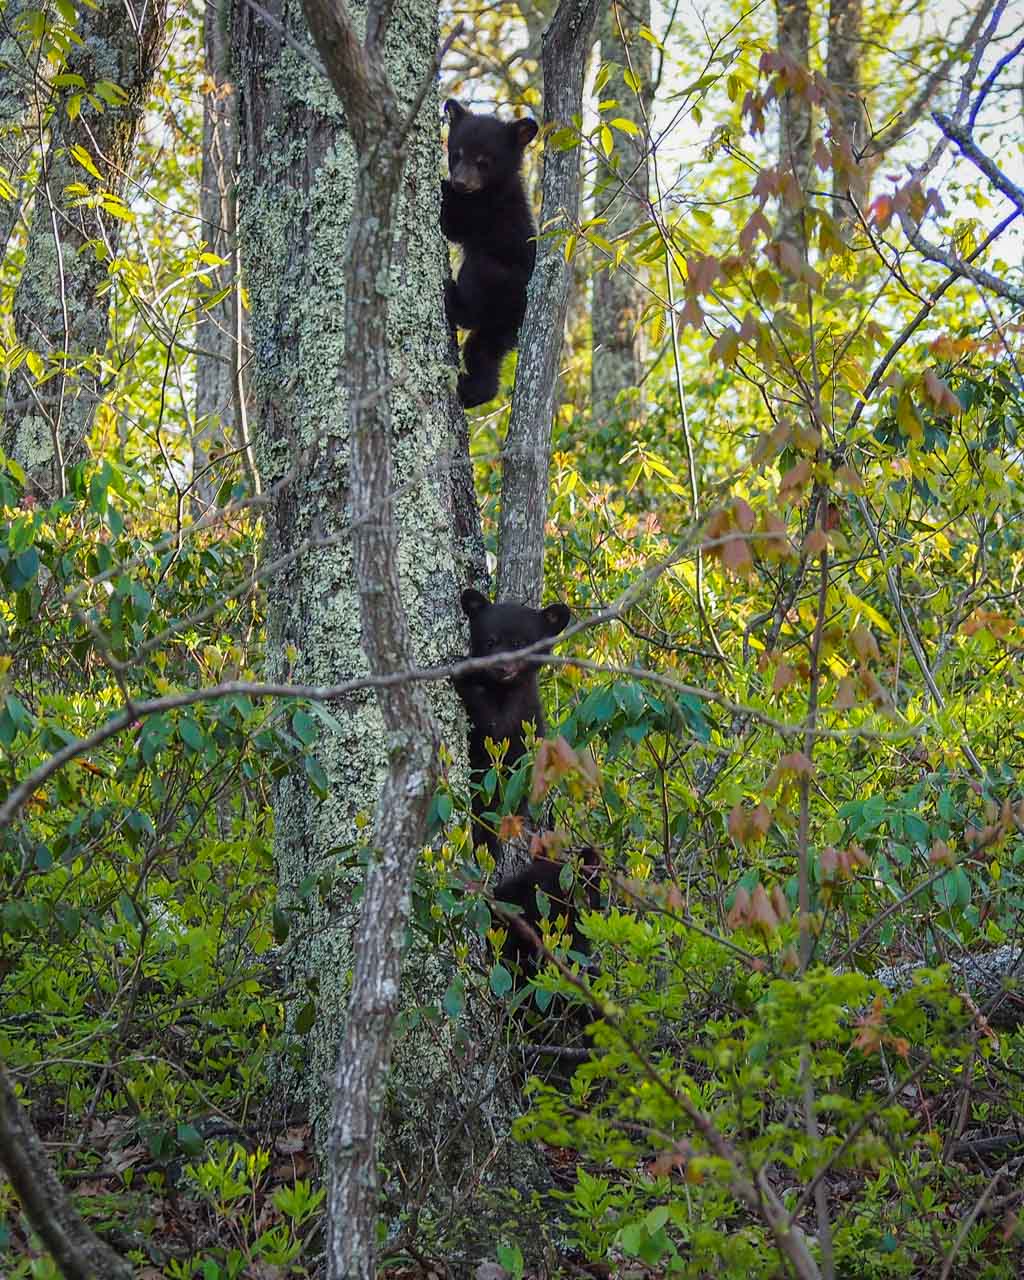 Black bear cubs in Shenandoah National Park, Virginia